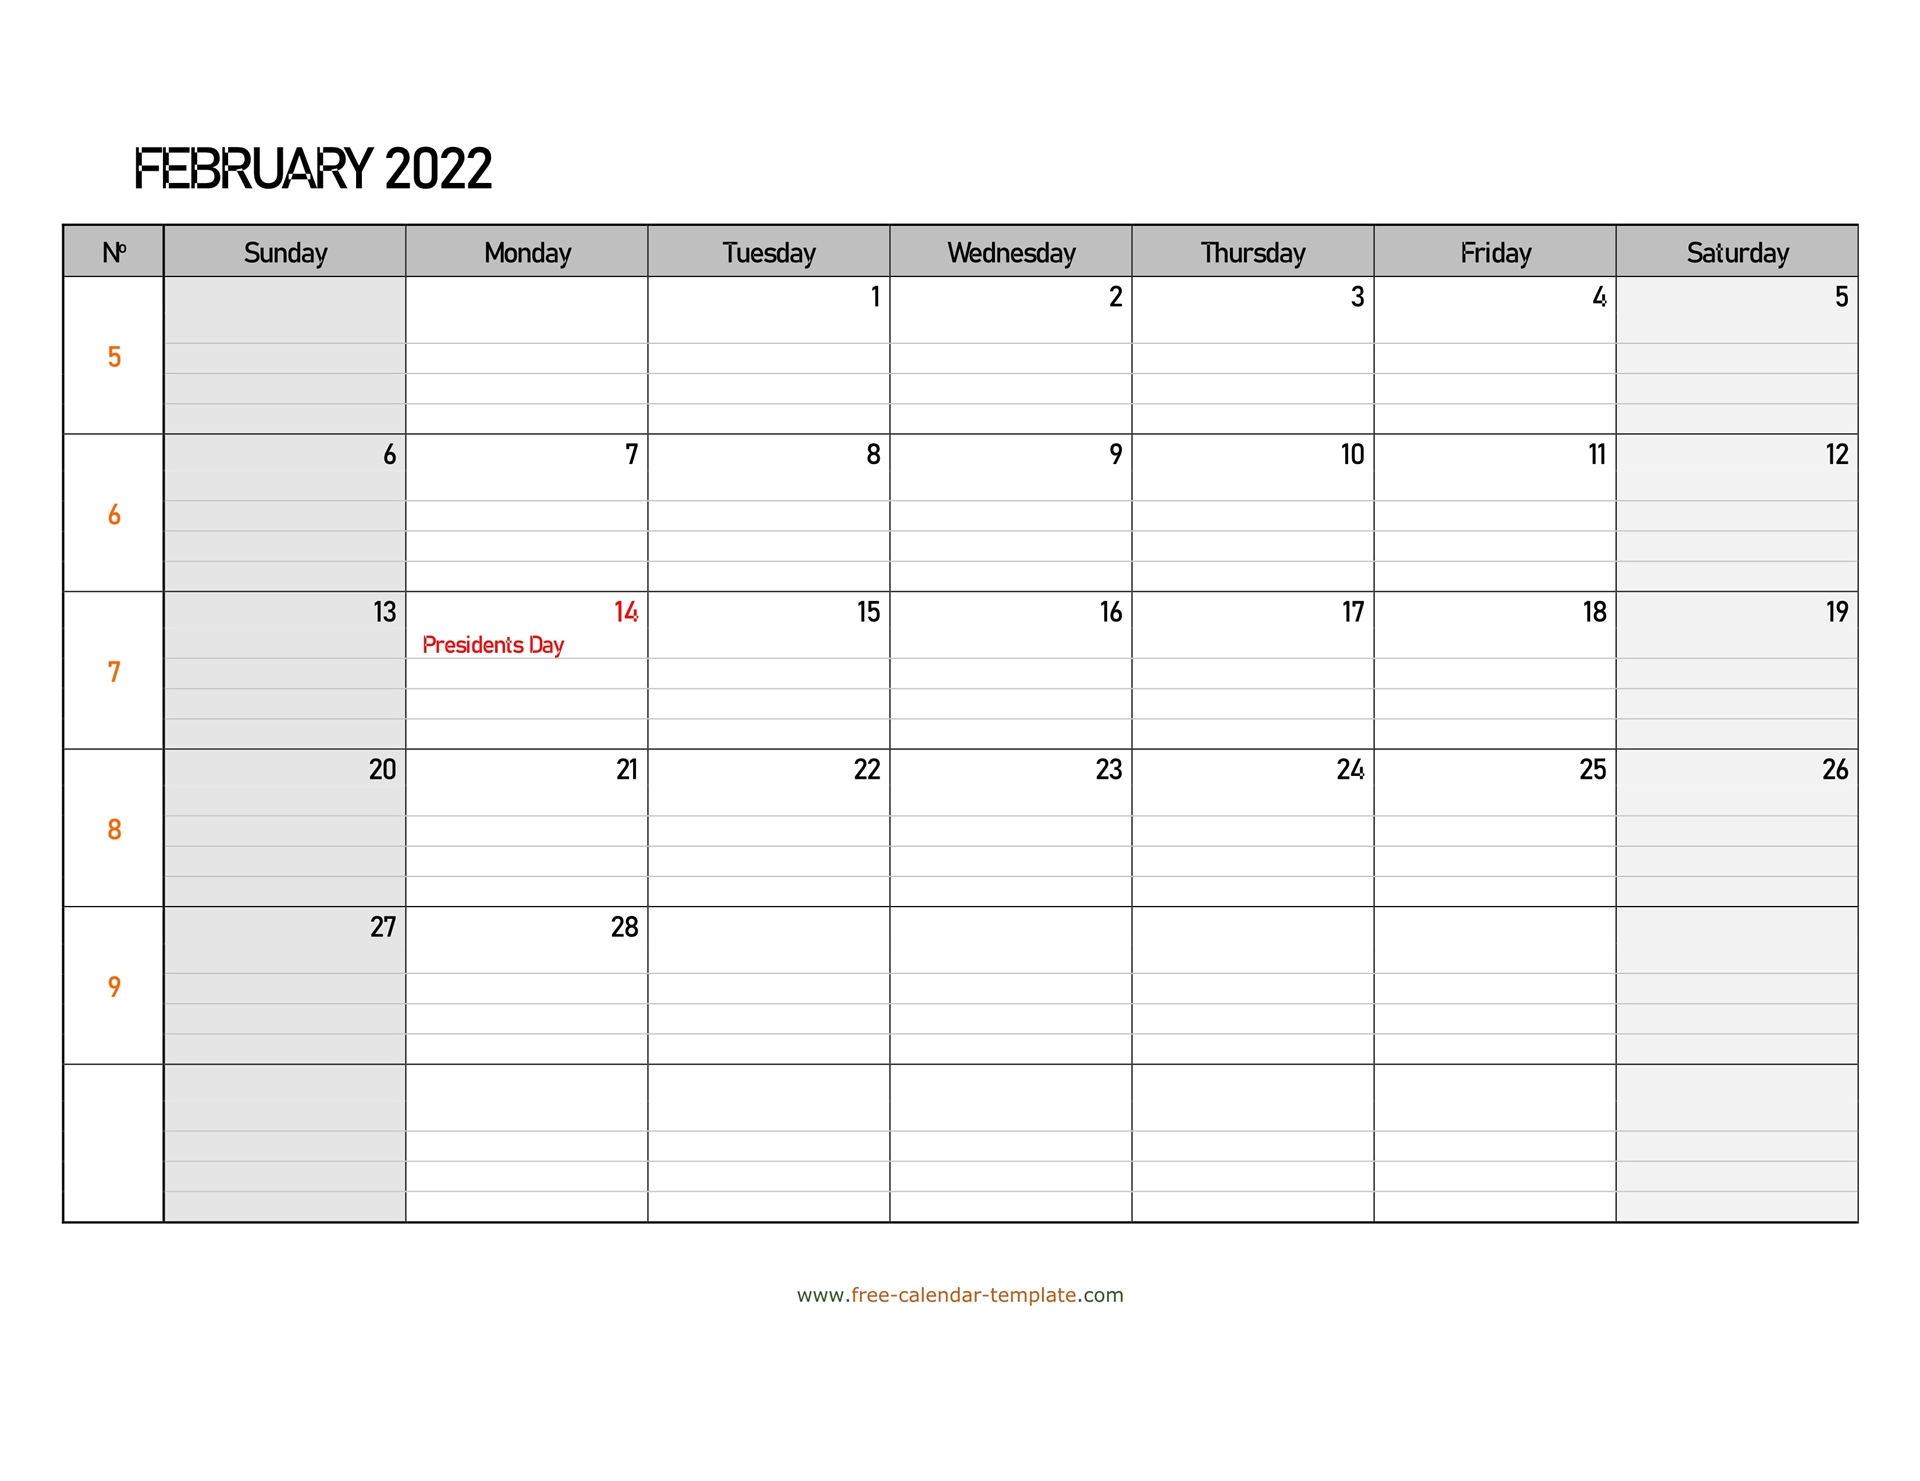 Decorative February 2022 Calendar For Message Boards - August Calendar 2022